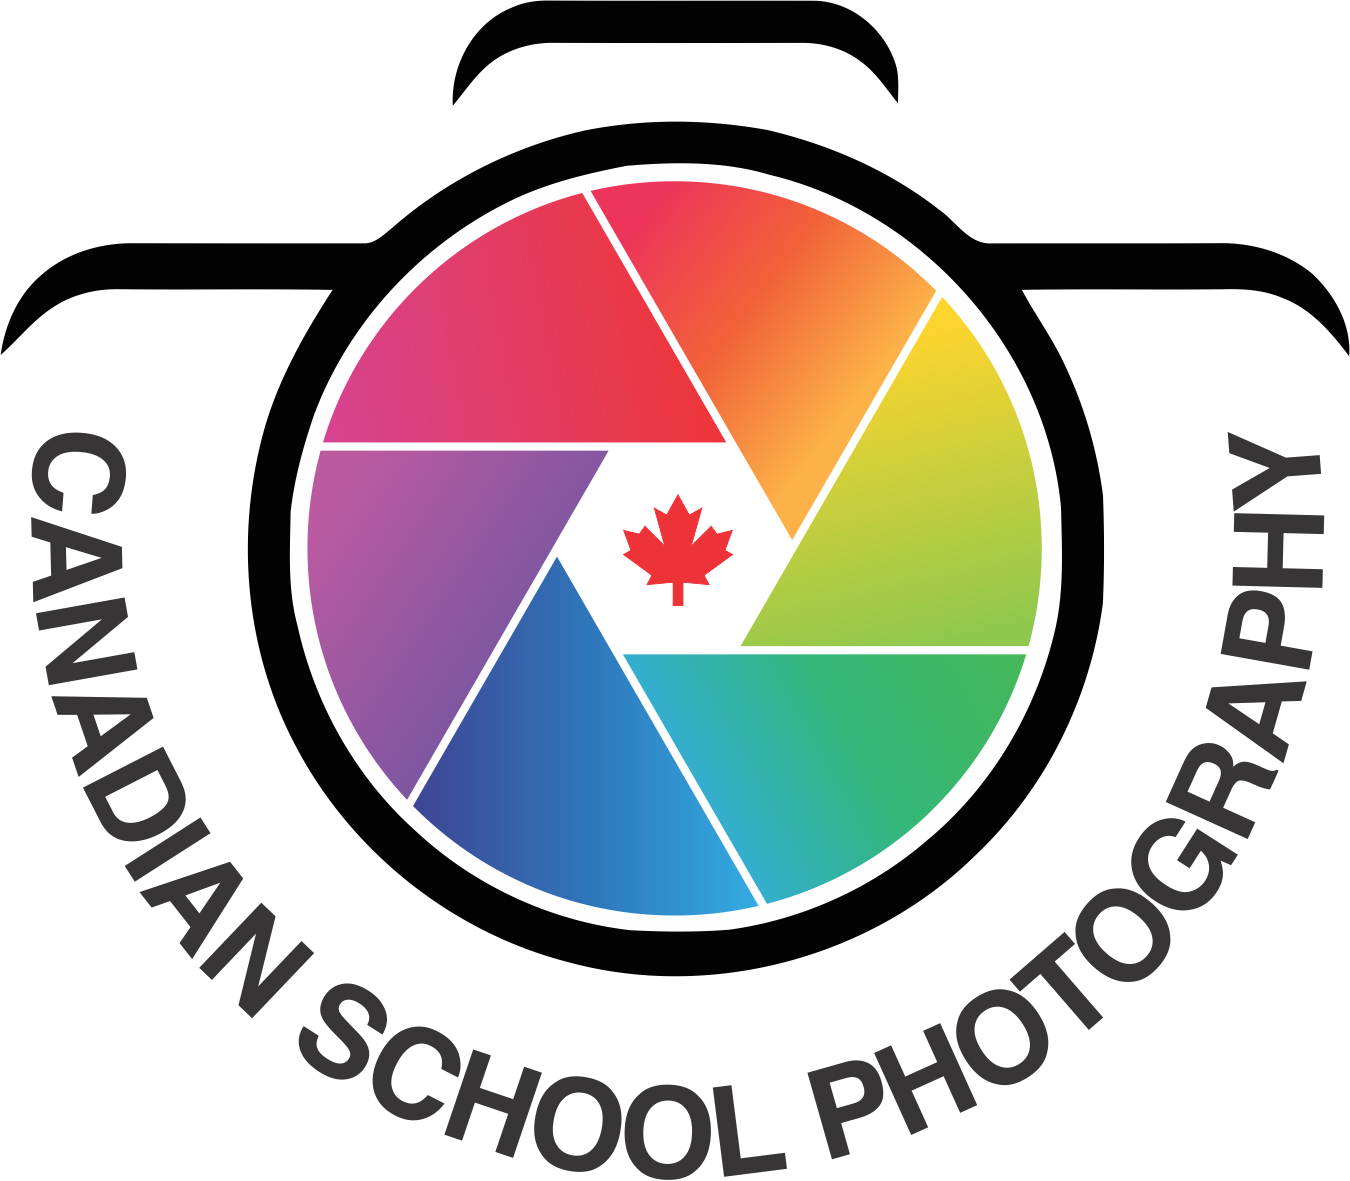 Canadian School Photography